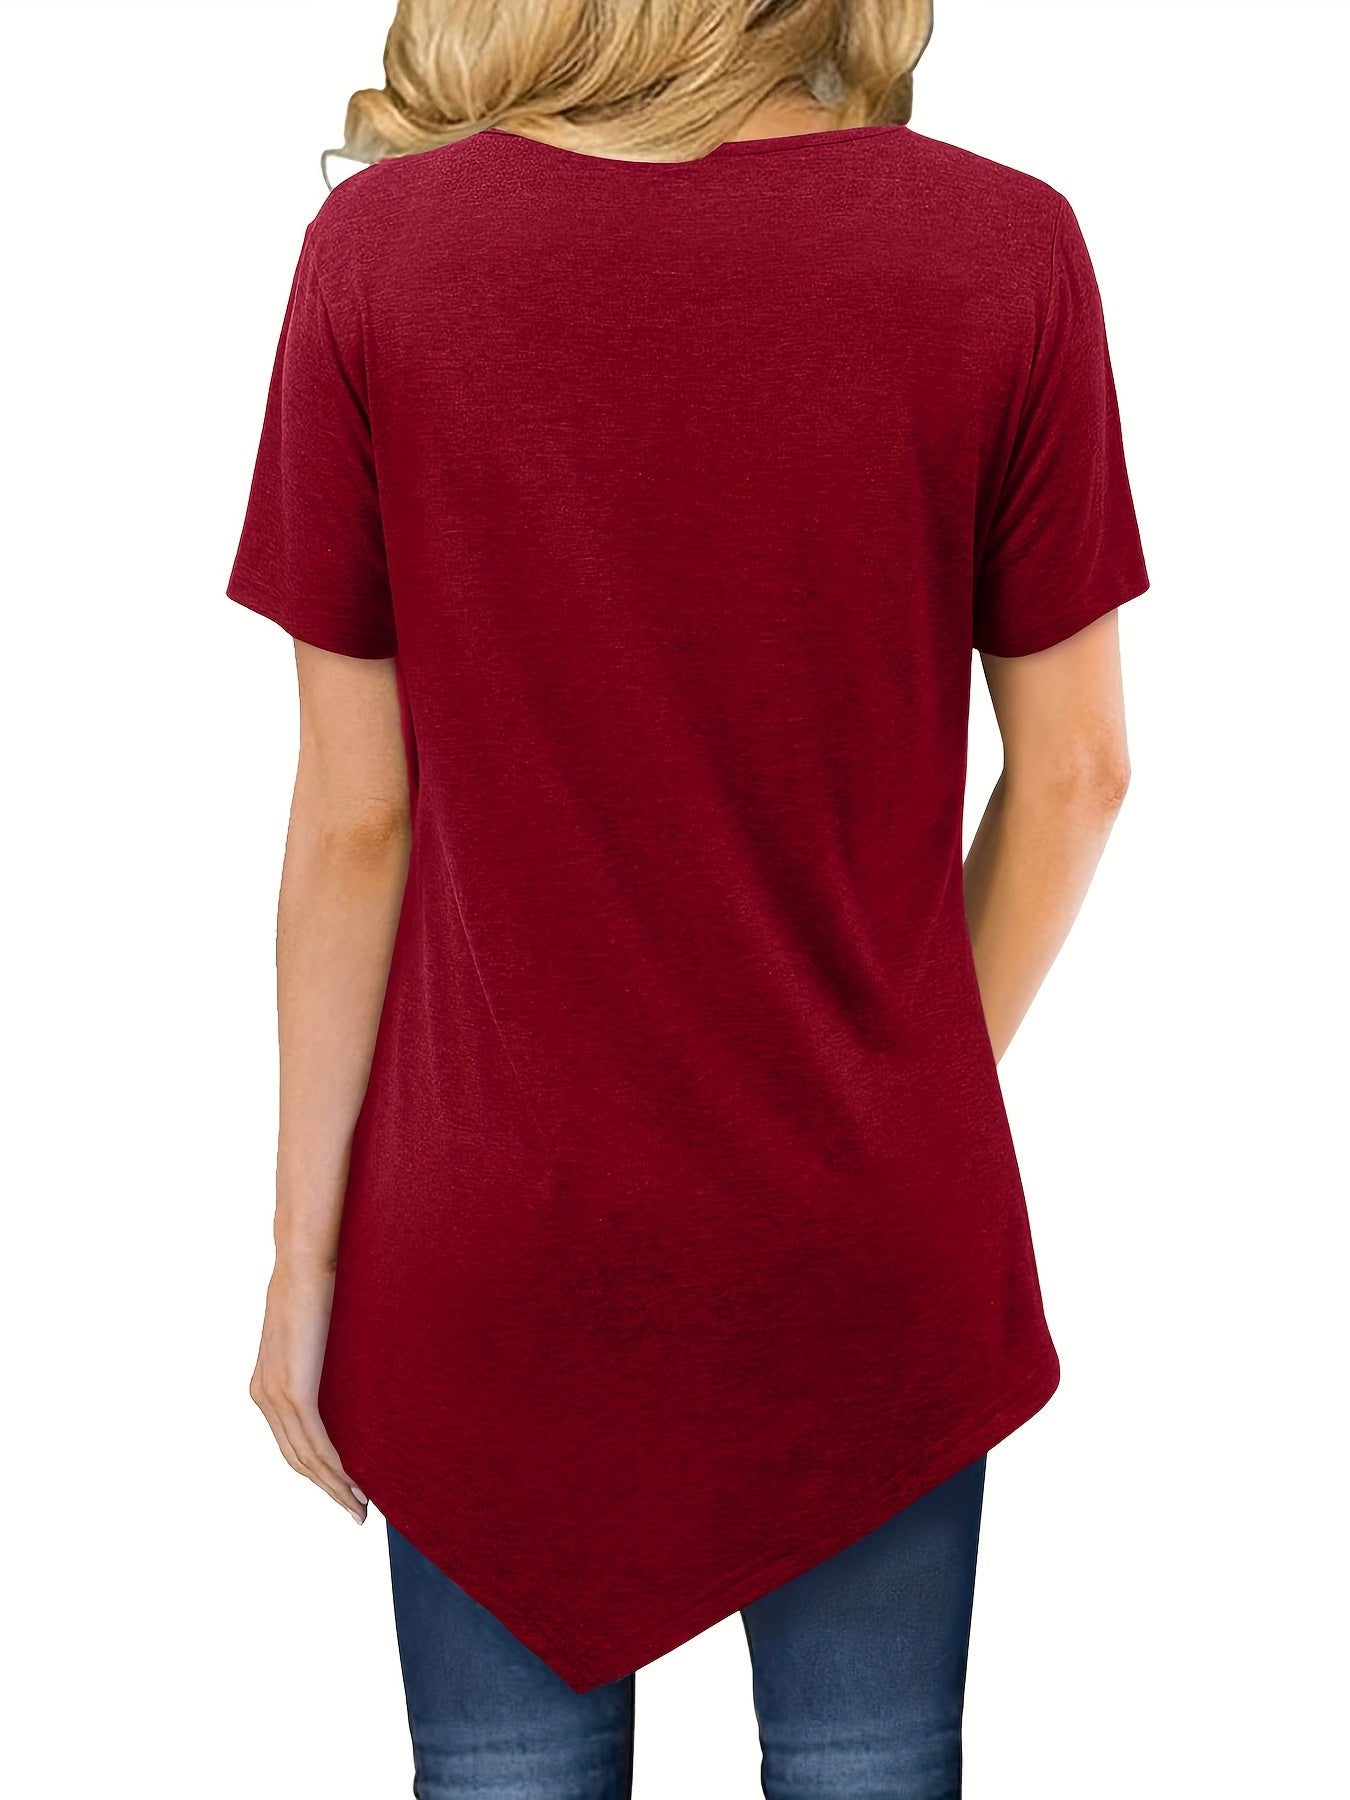 Vzyzv Solid Asymmetrical Hem T-shirt, Casual Crew Neck Short Sleeve Summer T-shirt, Women's Clothing